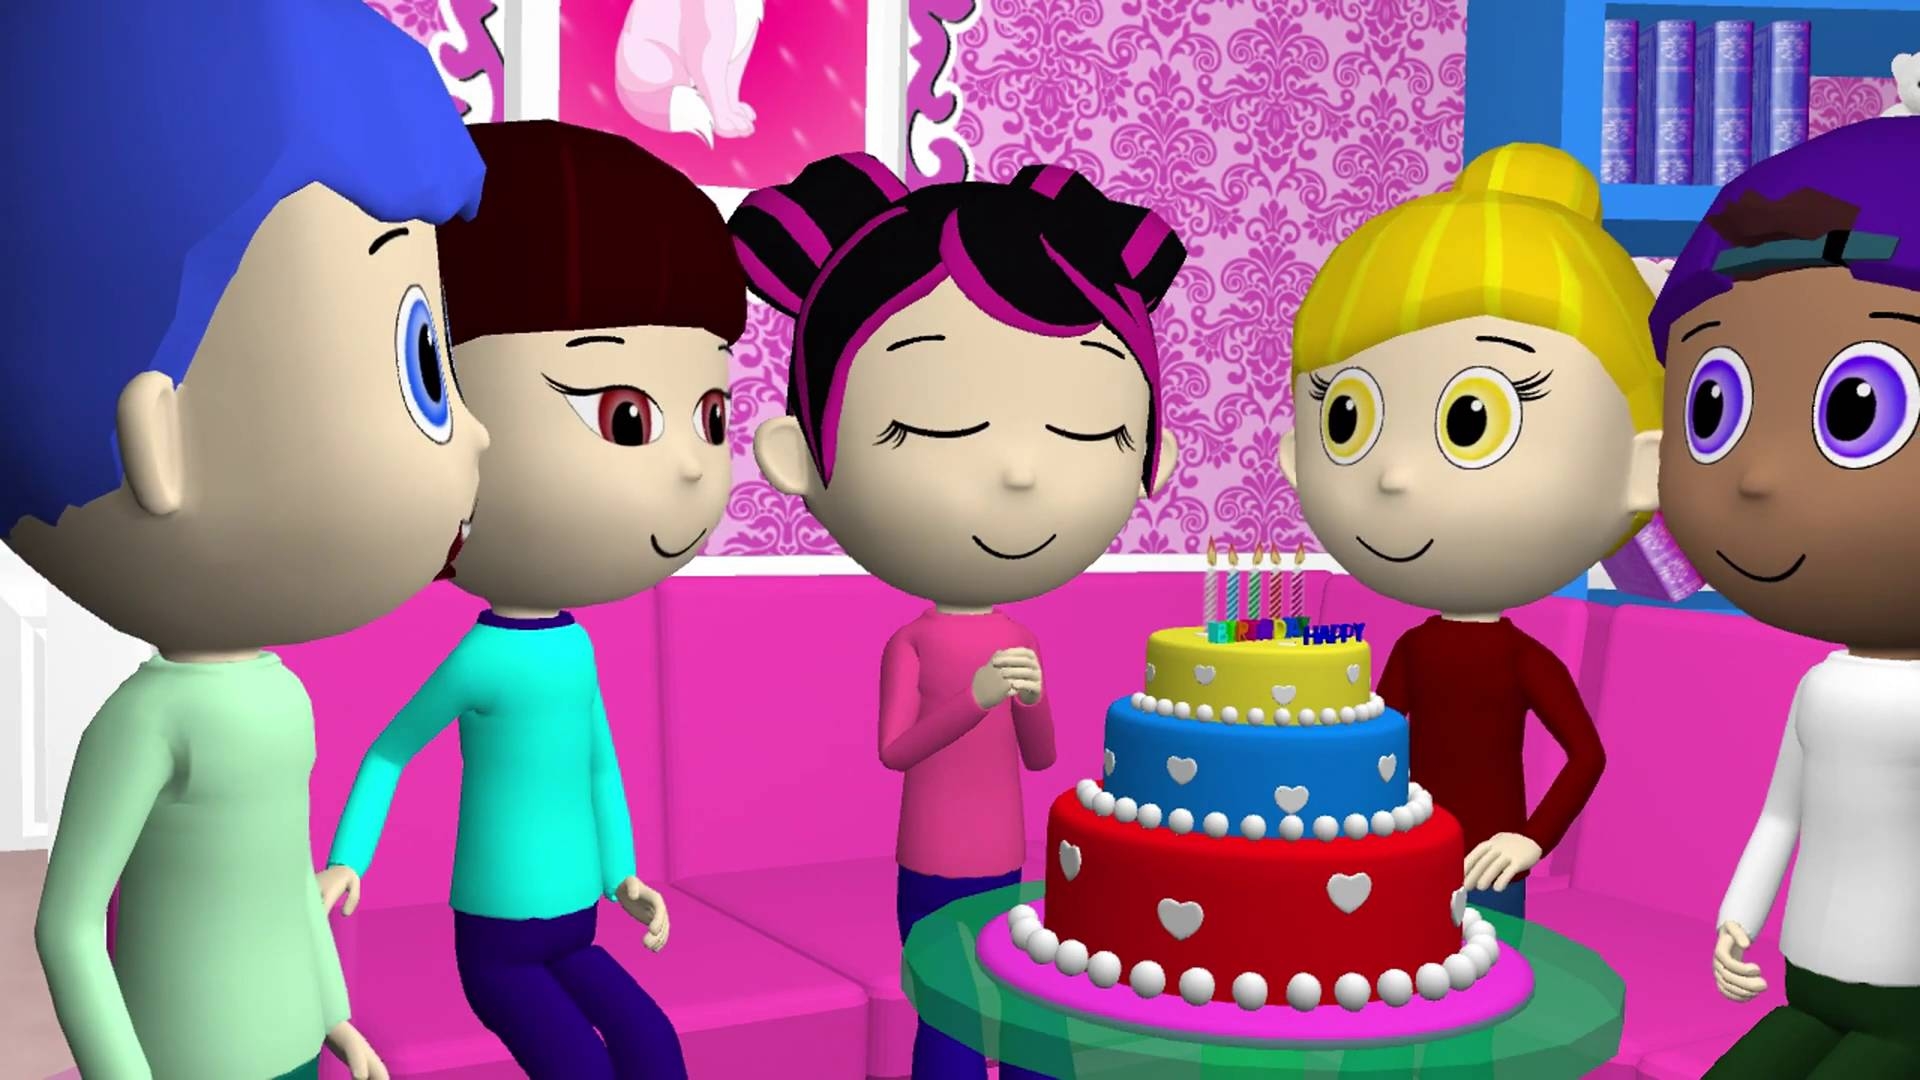 Happy Birthday 3d Wallpaper - Happy Birthday Image 3d , HD Wallpaper & Backgrounds